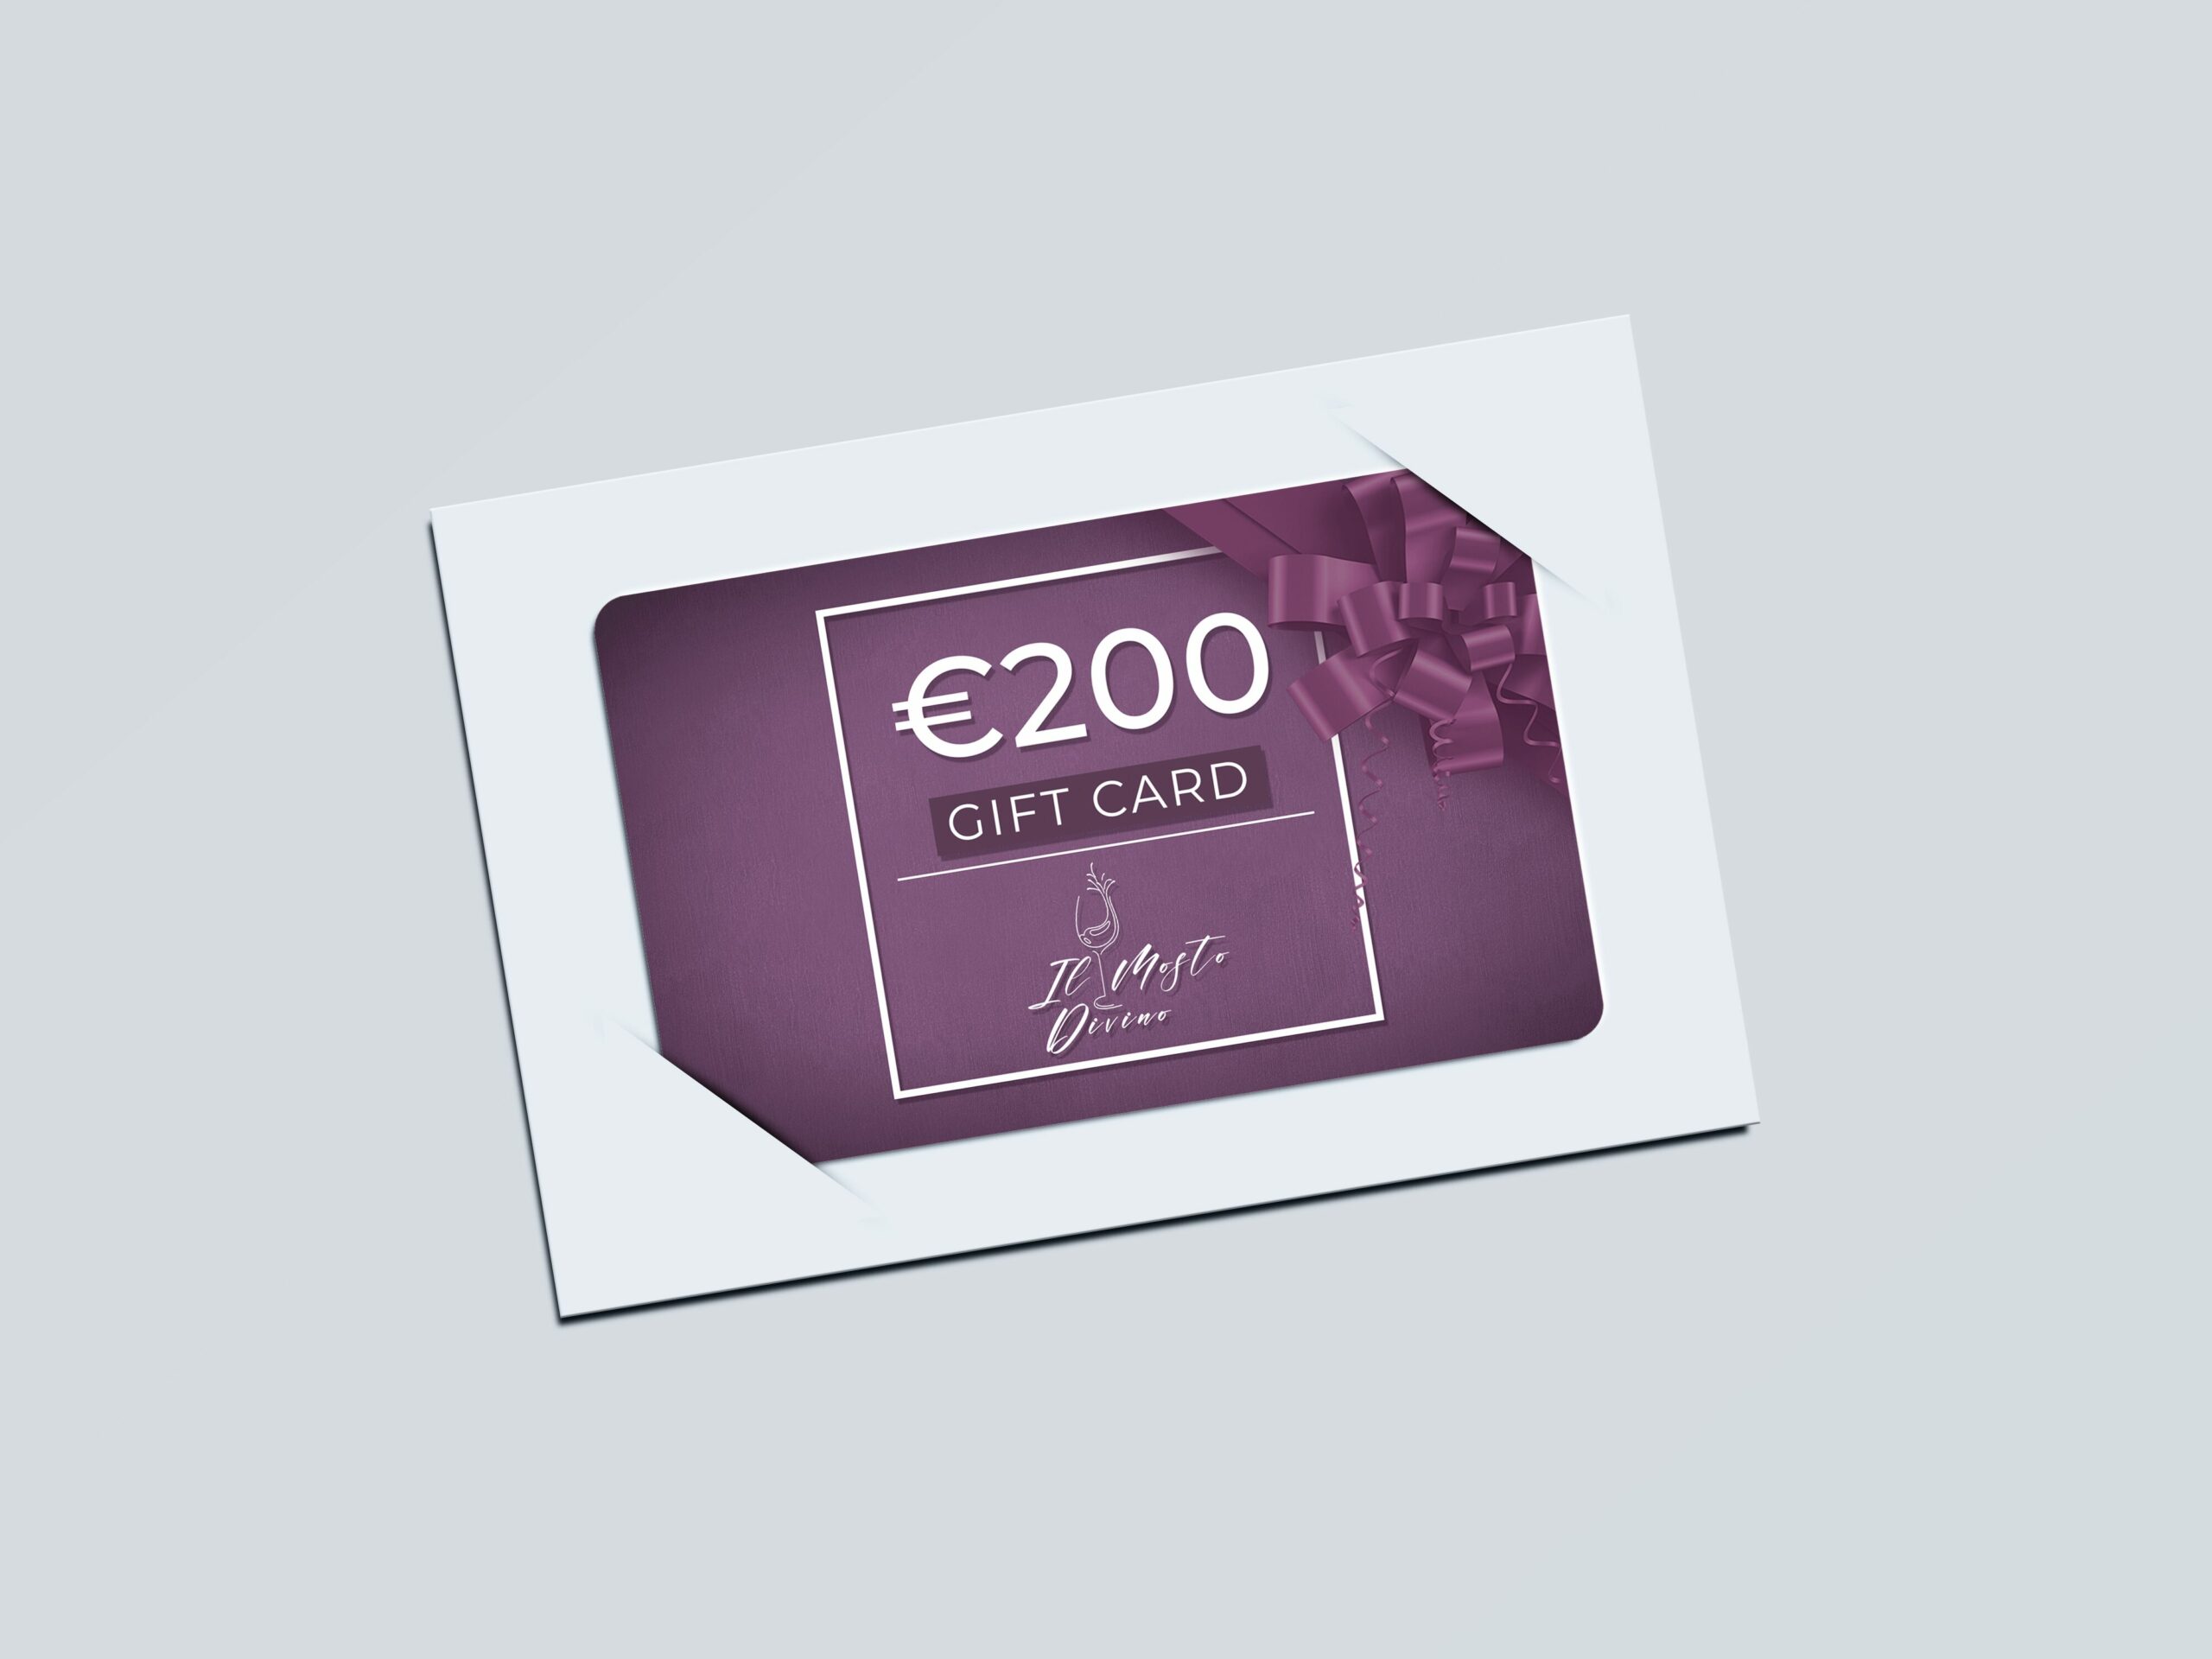 giftcard-mosto-card-200-euro-mosto-divino-milano